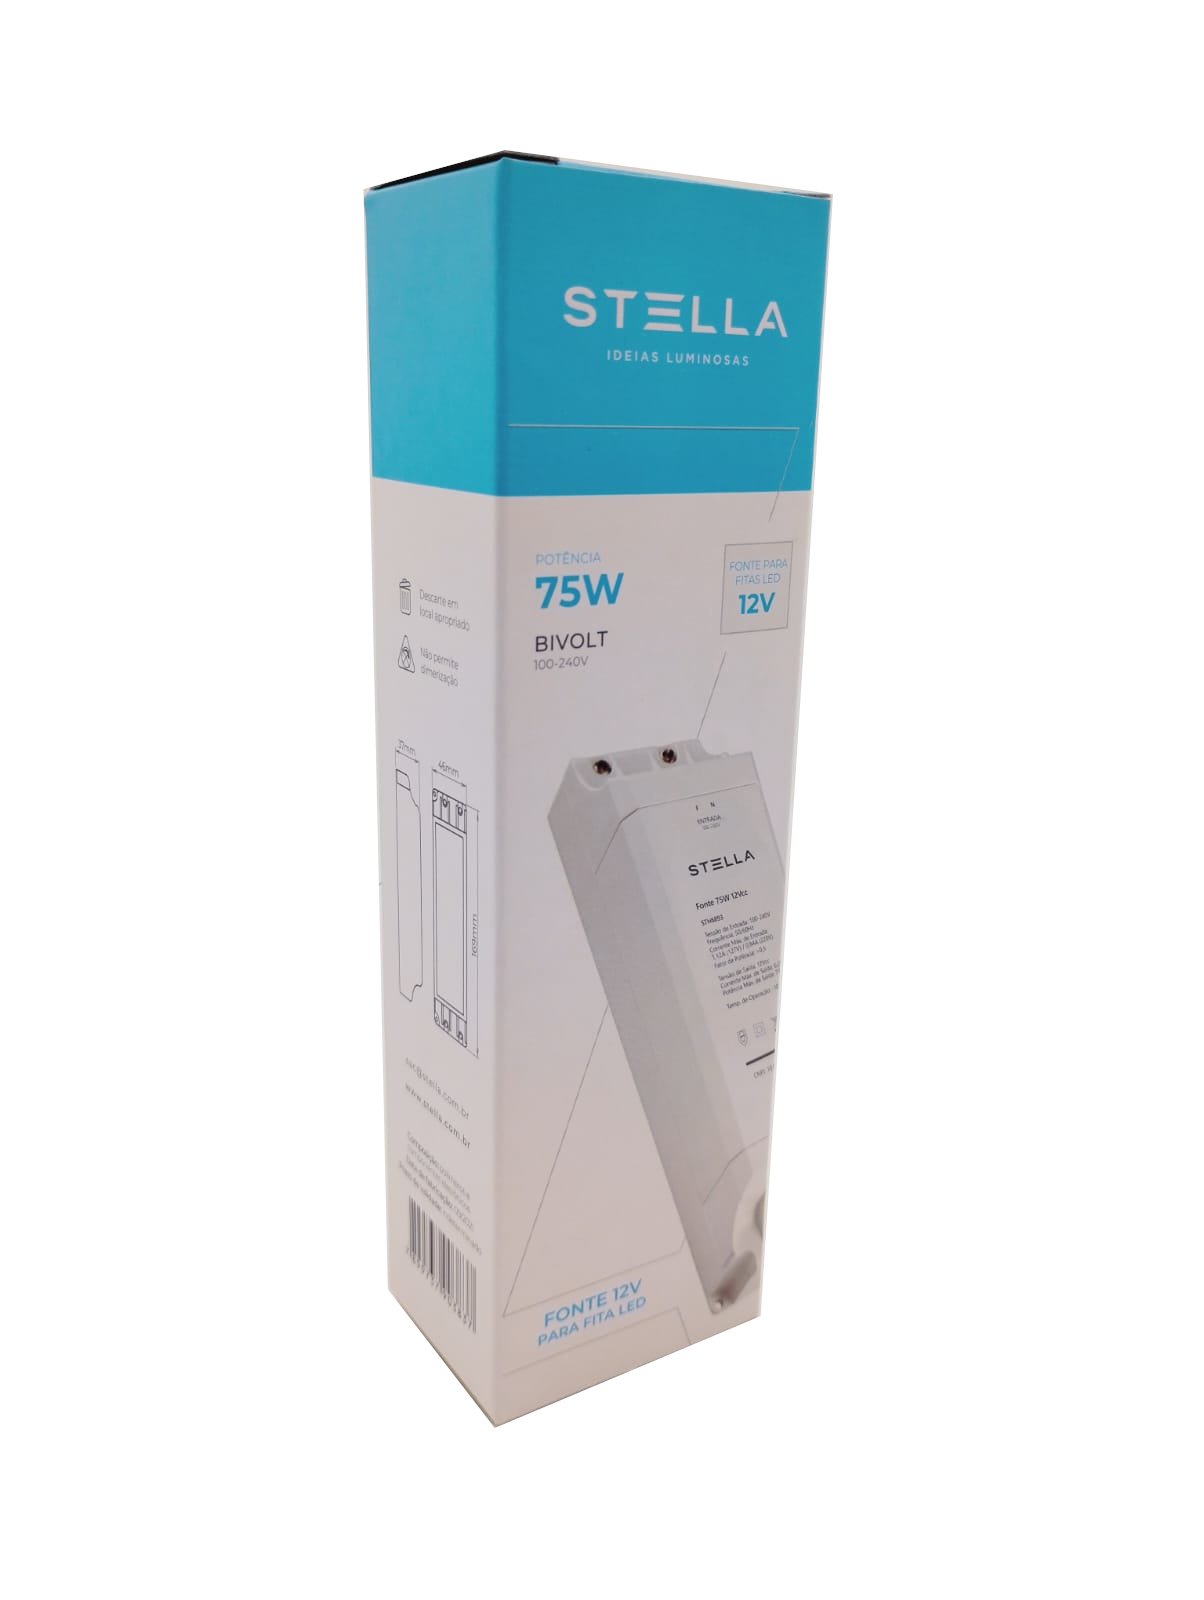 Fonte Profissional para LED 12V 75W IP 20 1 Stella - STH6893 - 3